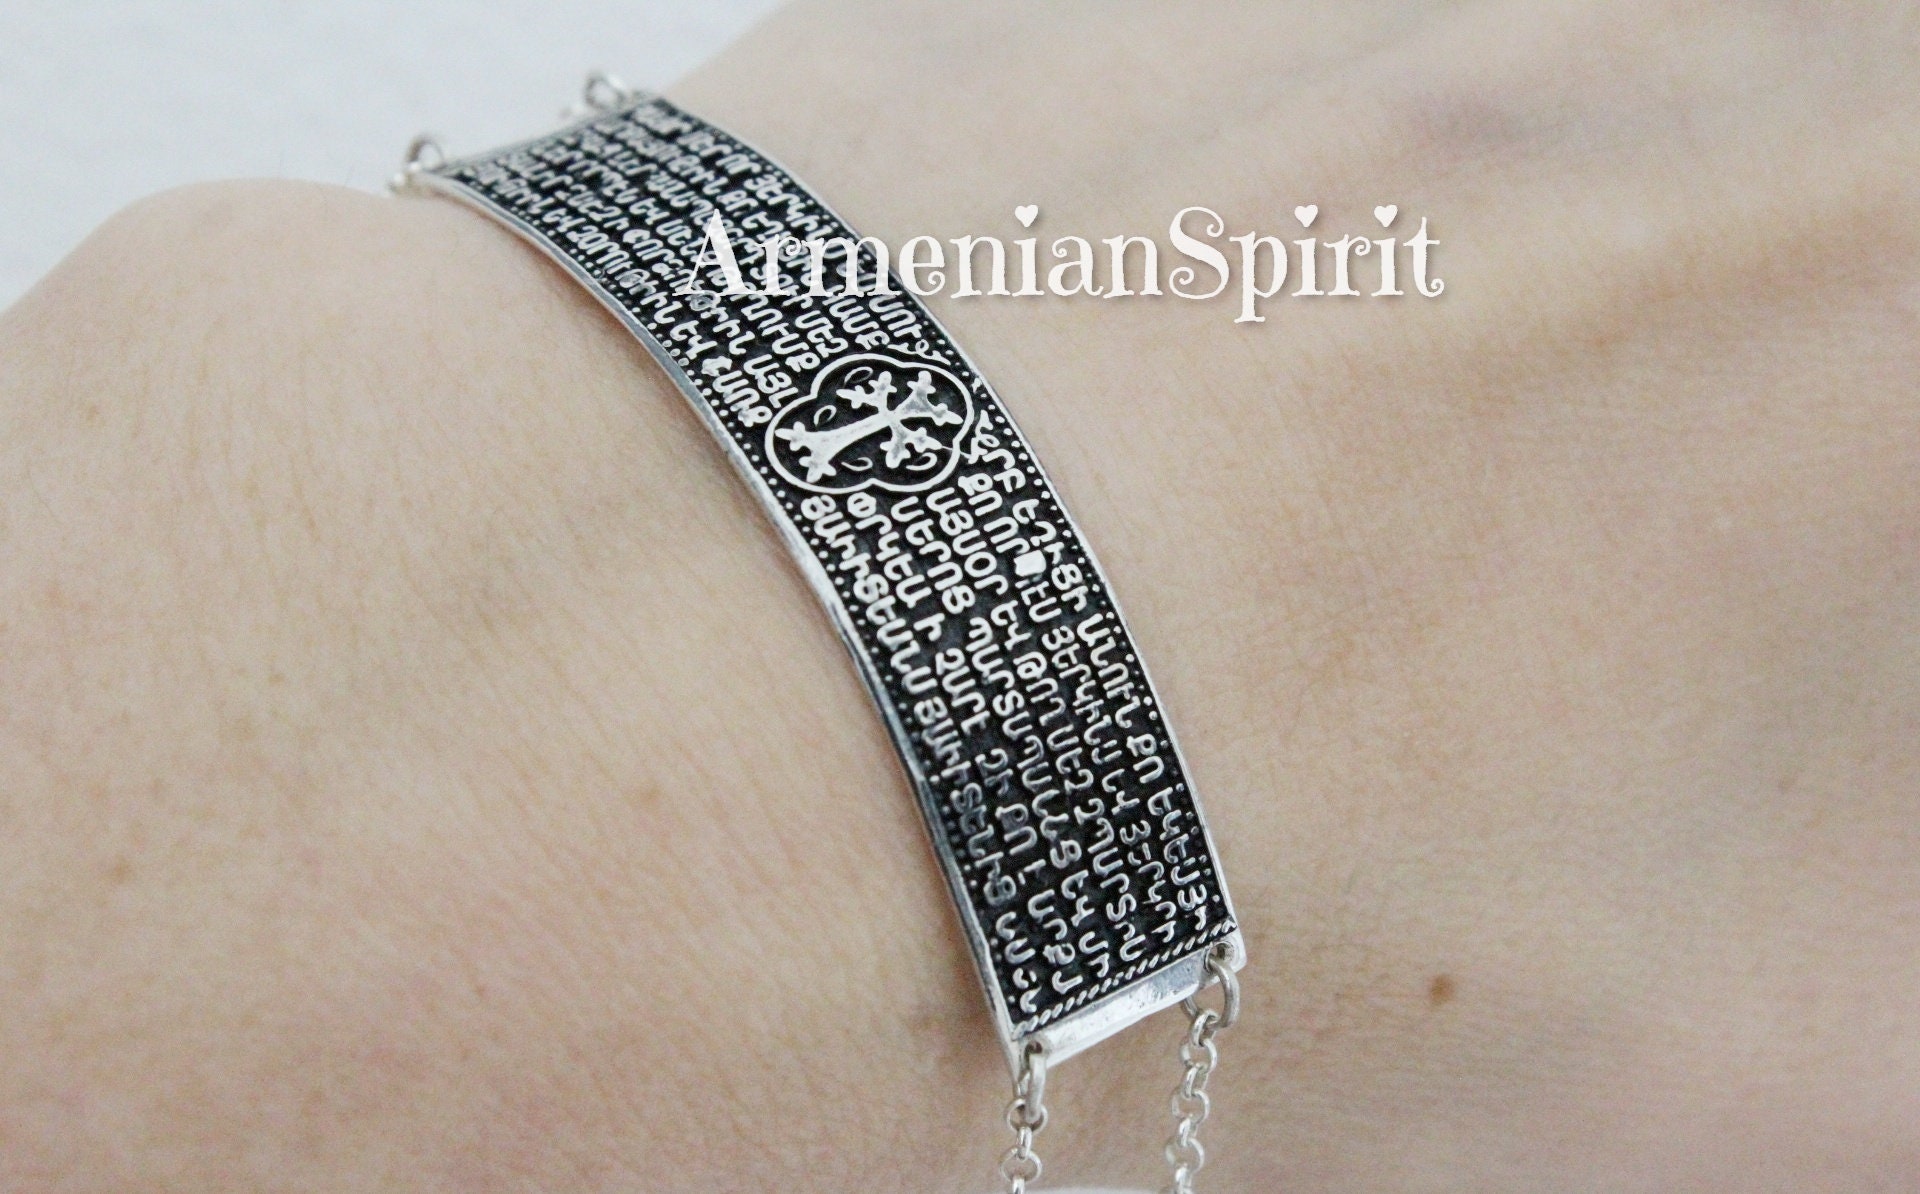 Leather Bracelet Lock and Key for Men Sterling Silver 925 - SunnyArmenia